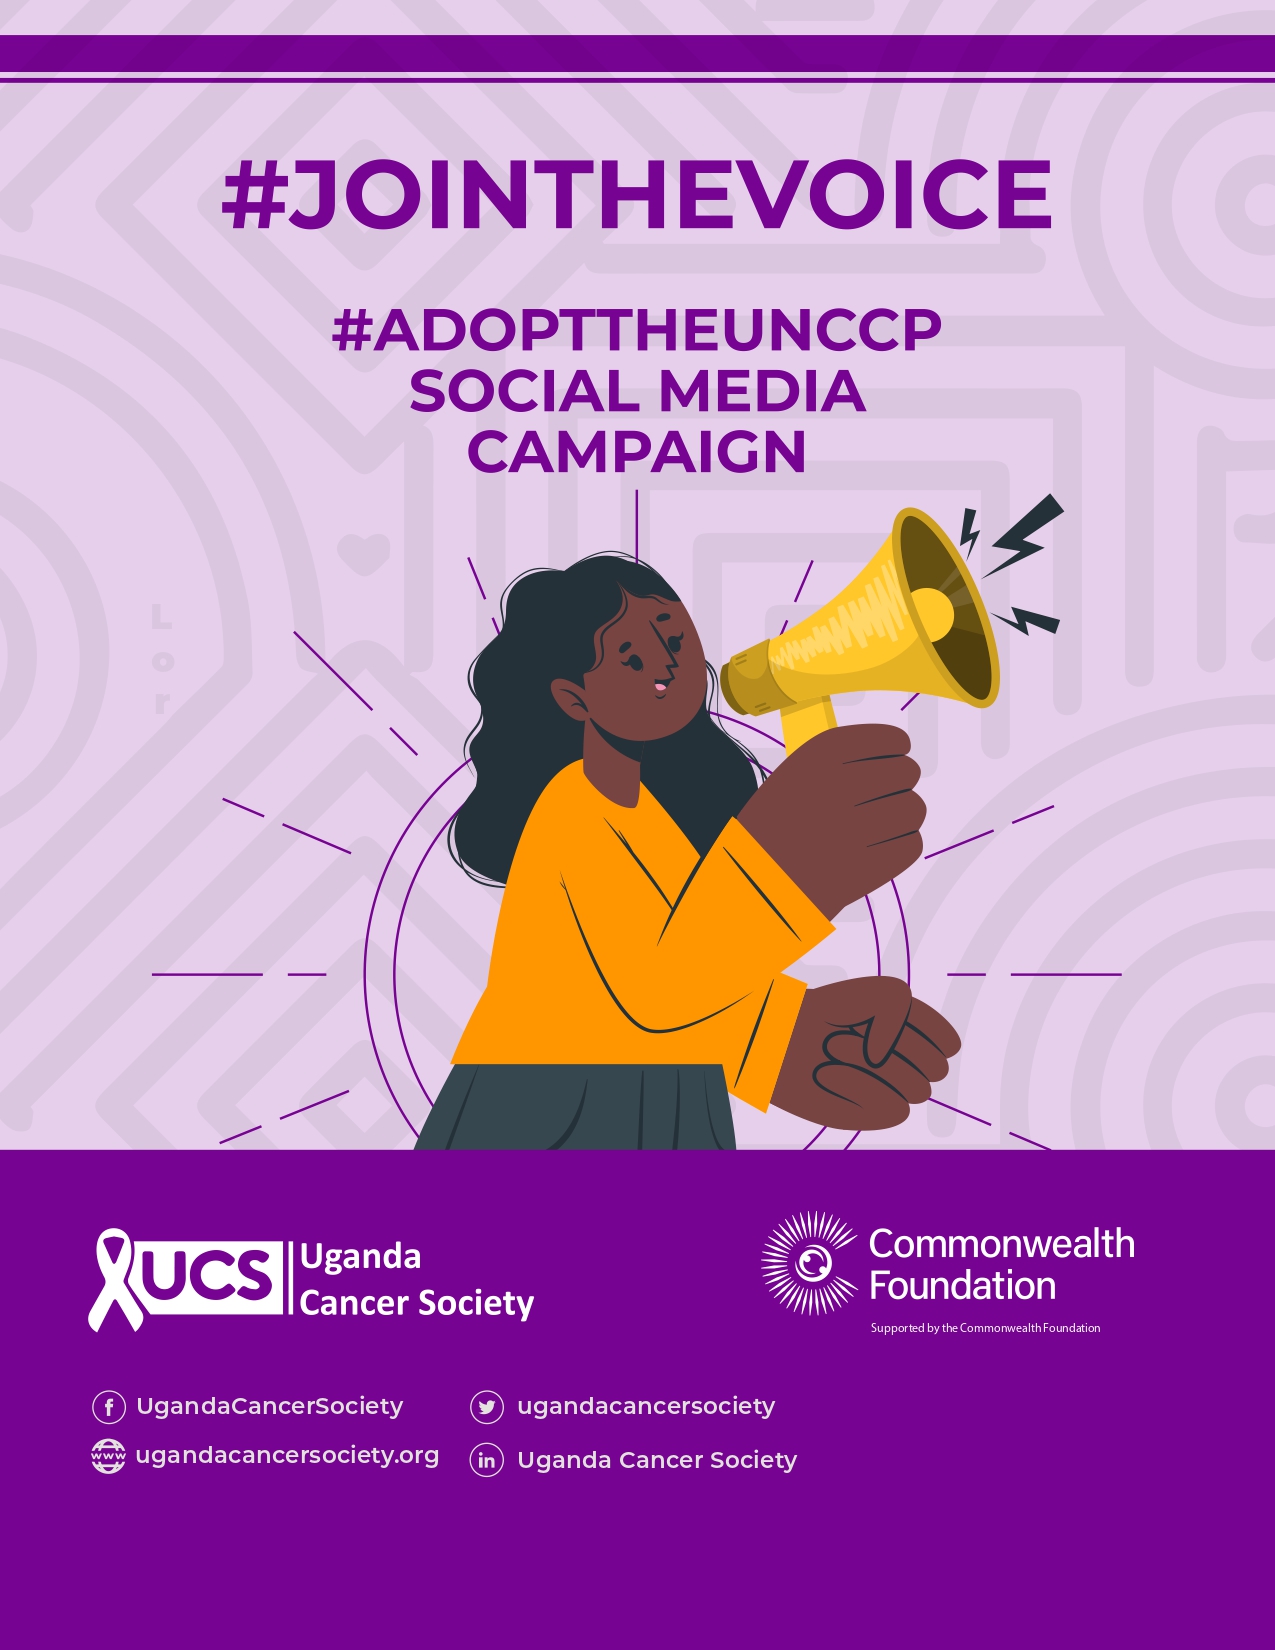 #jointhevoice #adopttheUNCCP social media campaign